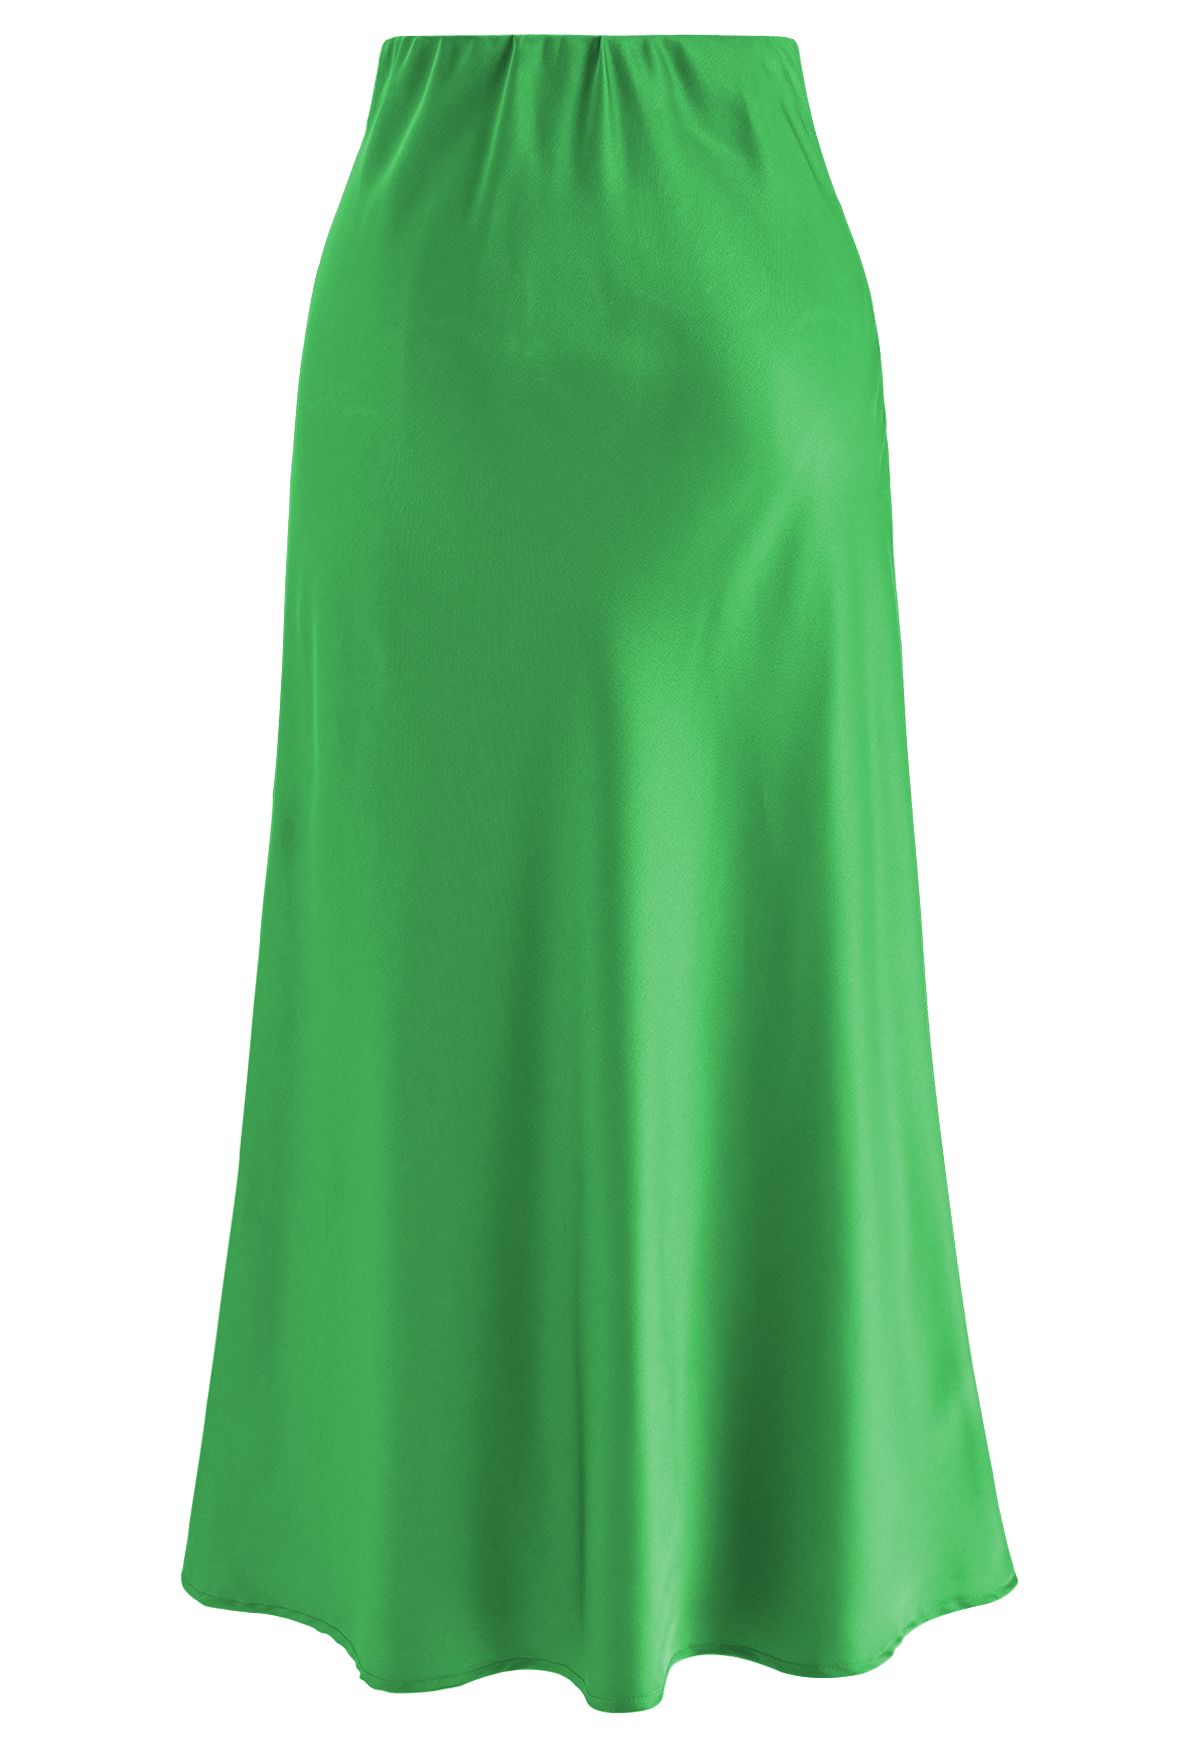 Satin Finish Bias Cut Midi Skirt in Green